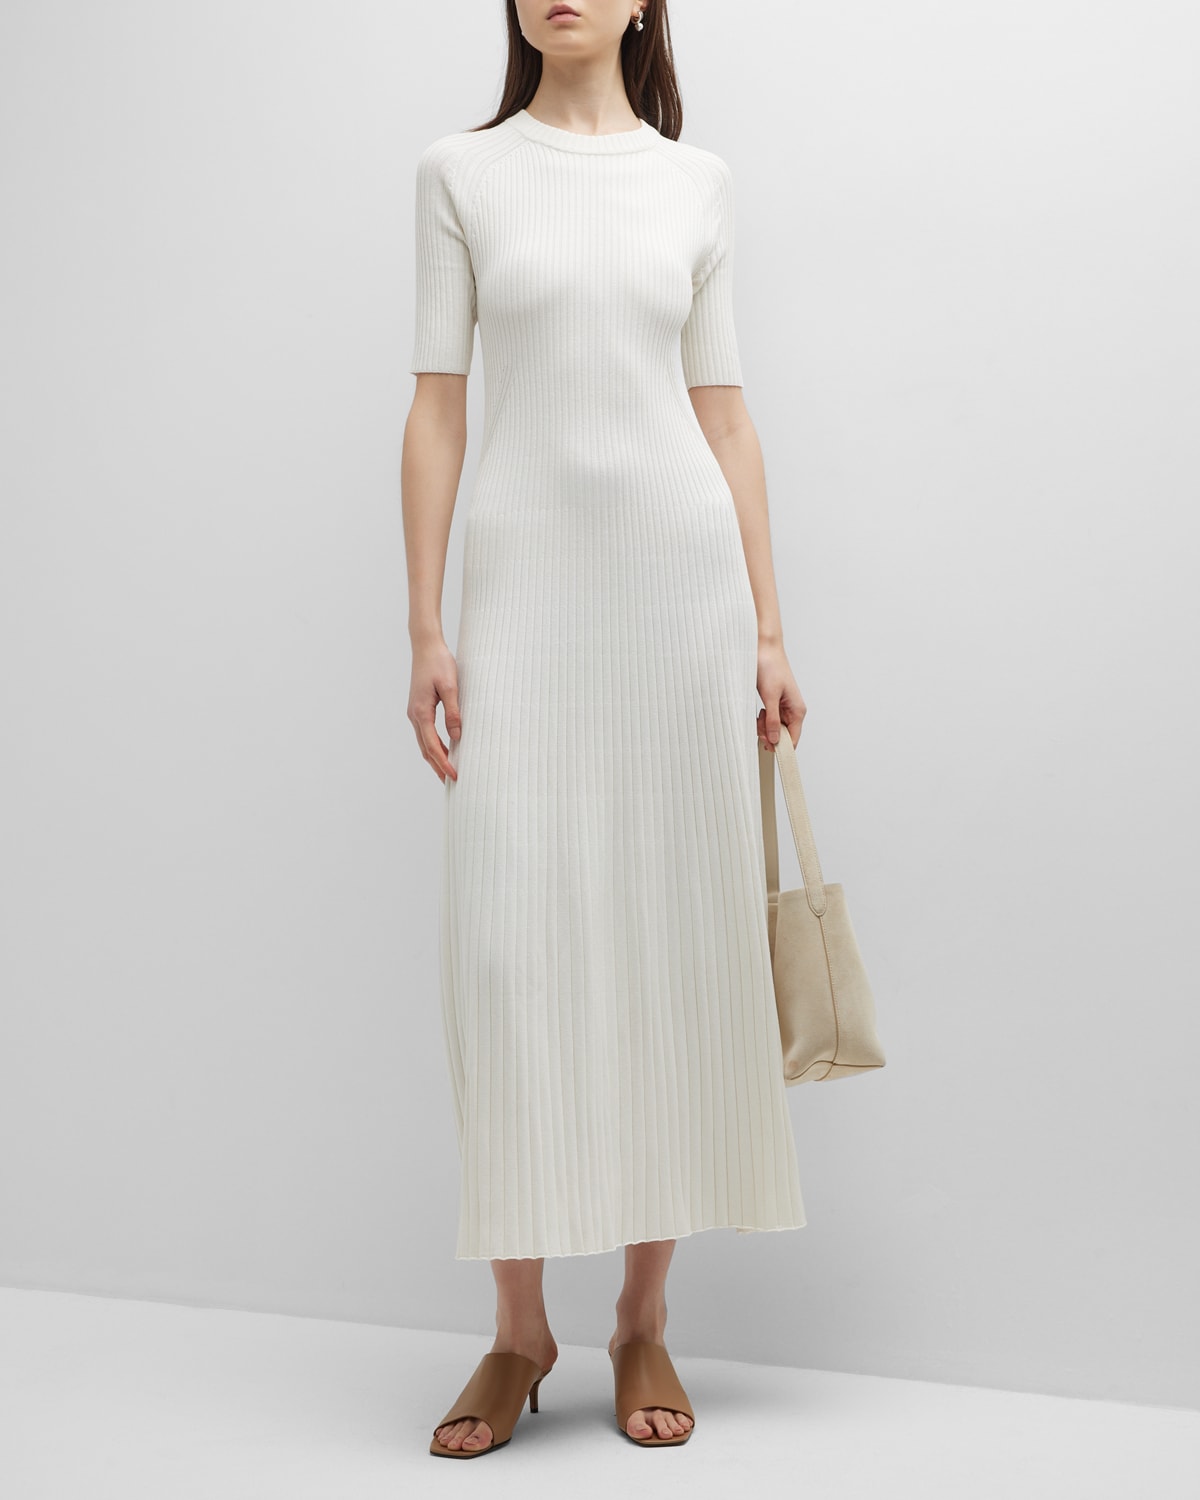 Loulou Studio Short-Sleeve Tea-Length Rib Knit Dress